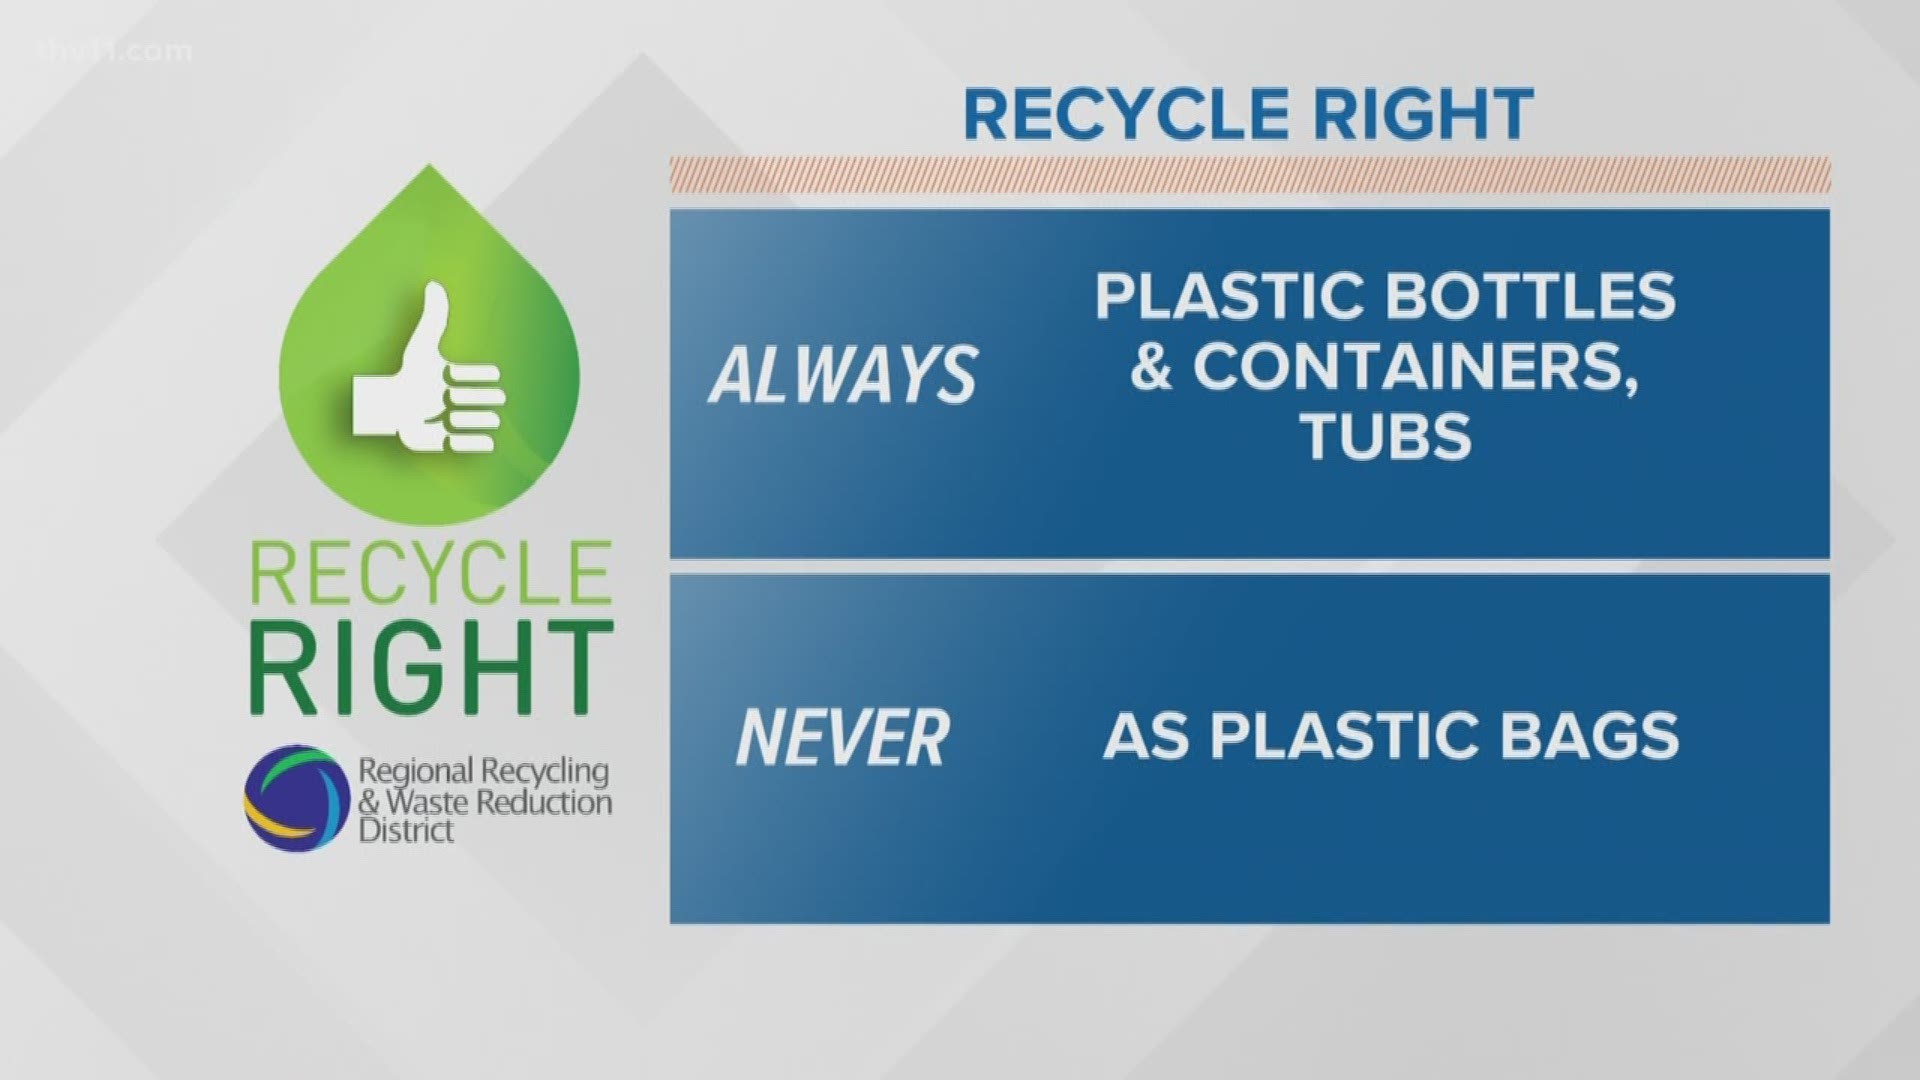 Meteorologist Mariel Ruiz has your recycle right tip for week 20.